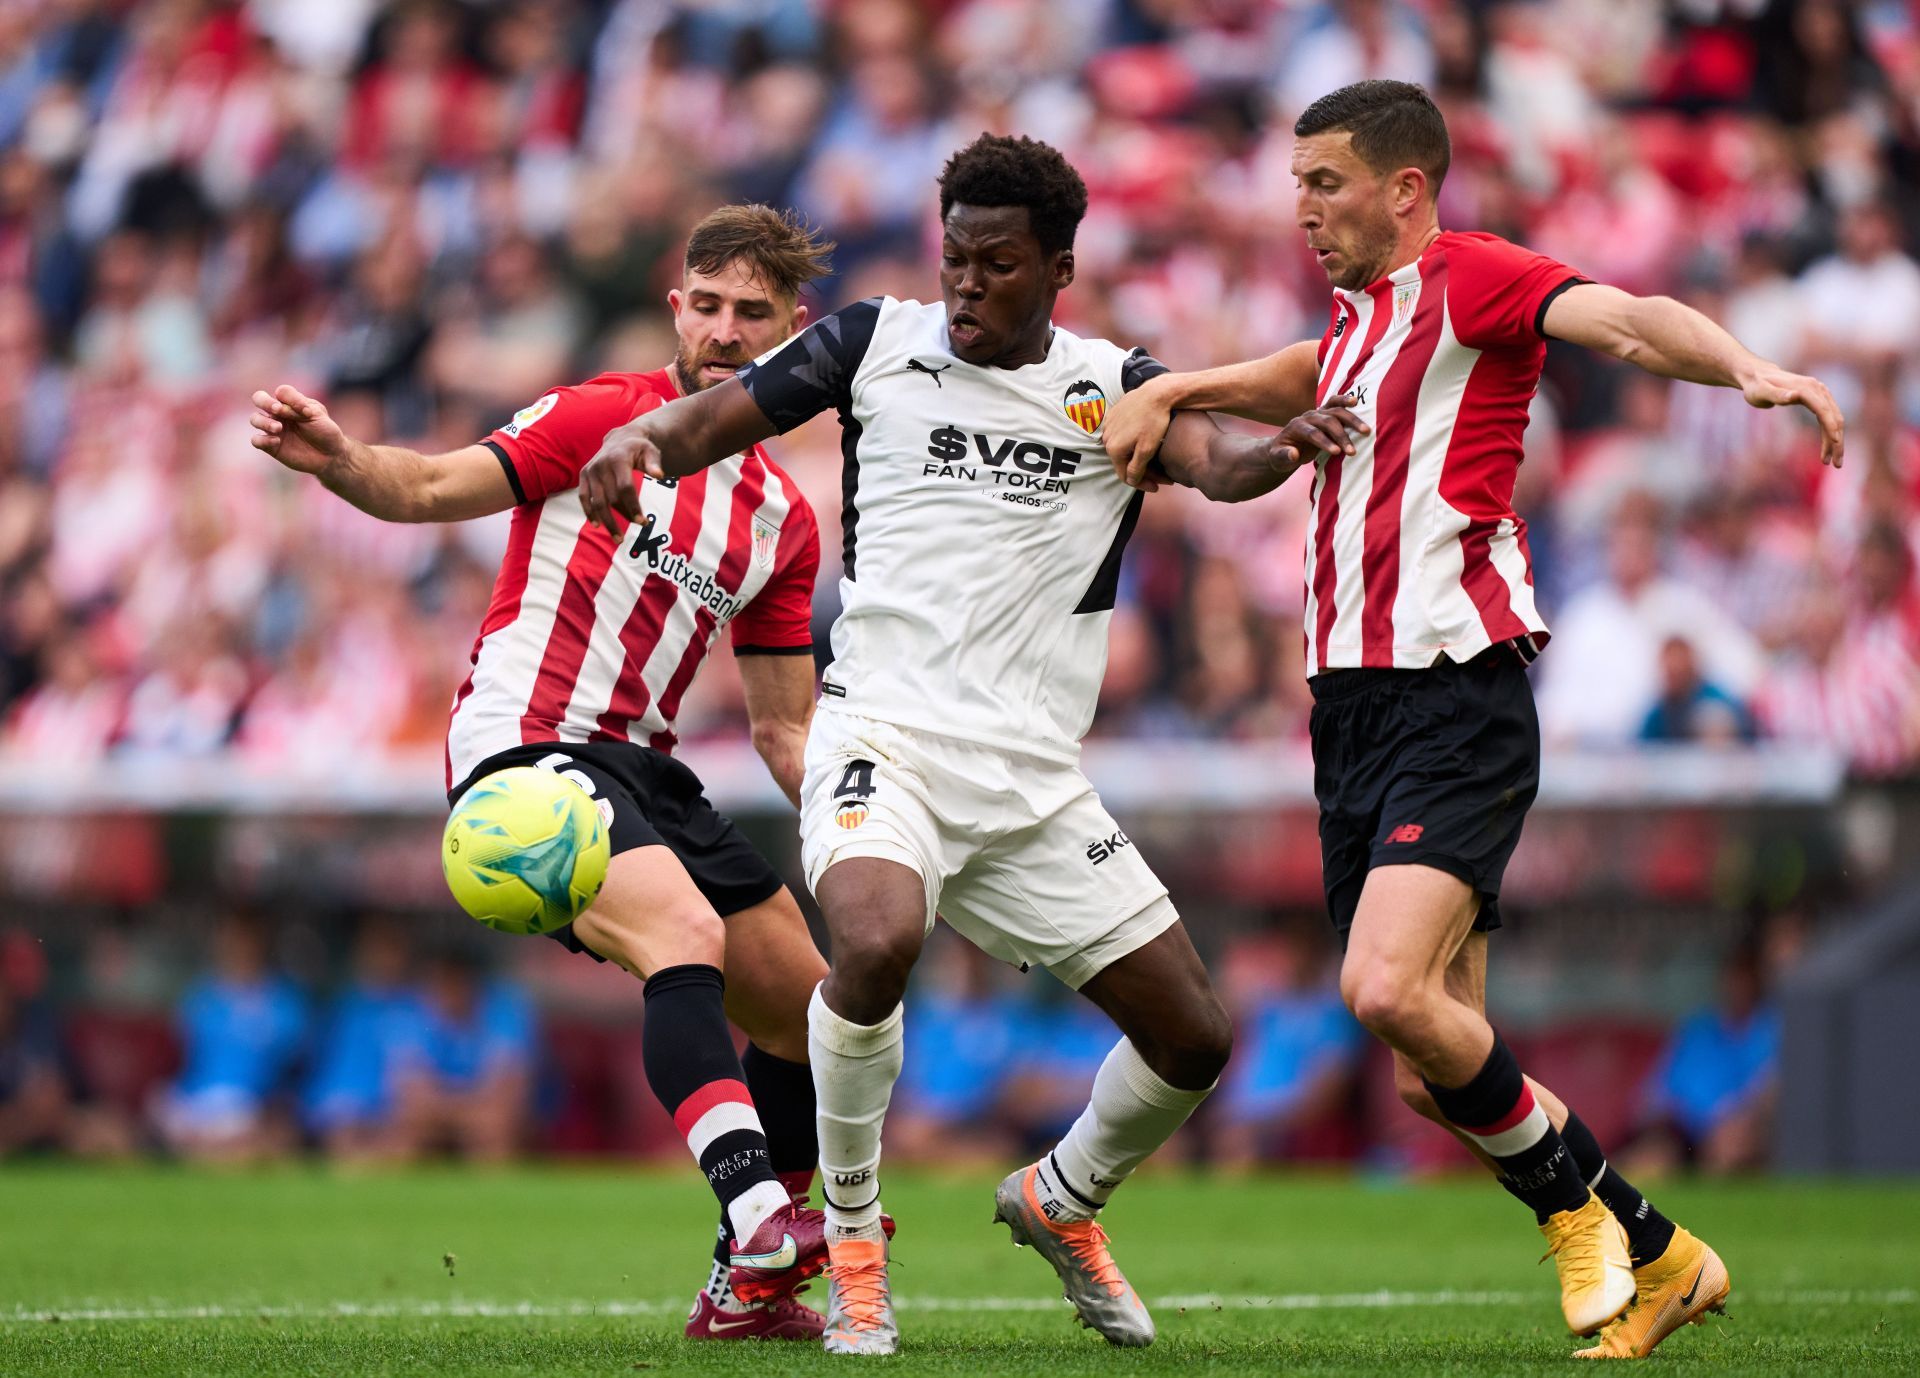 Athletic Bilbao and Valencia meet in a La Liga fixture on Sunday